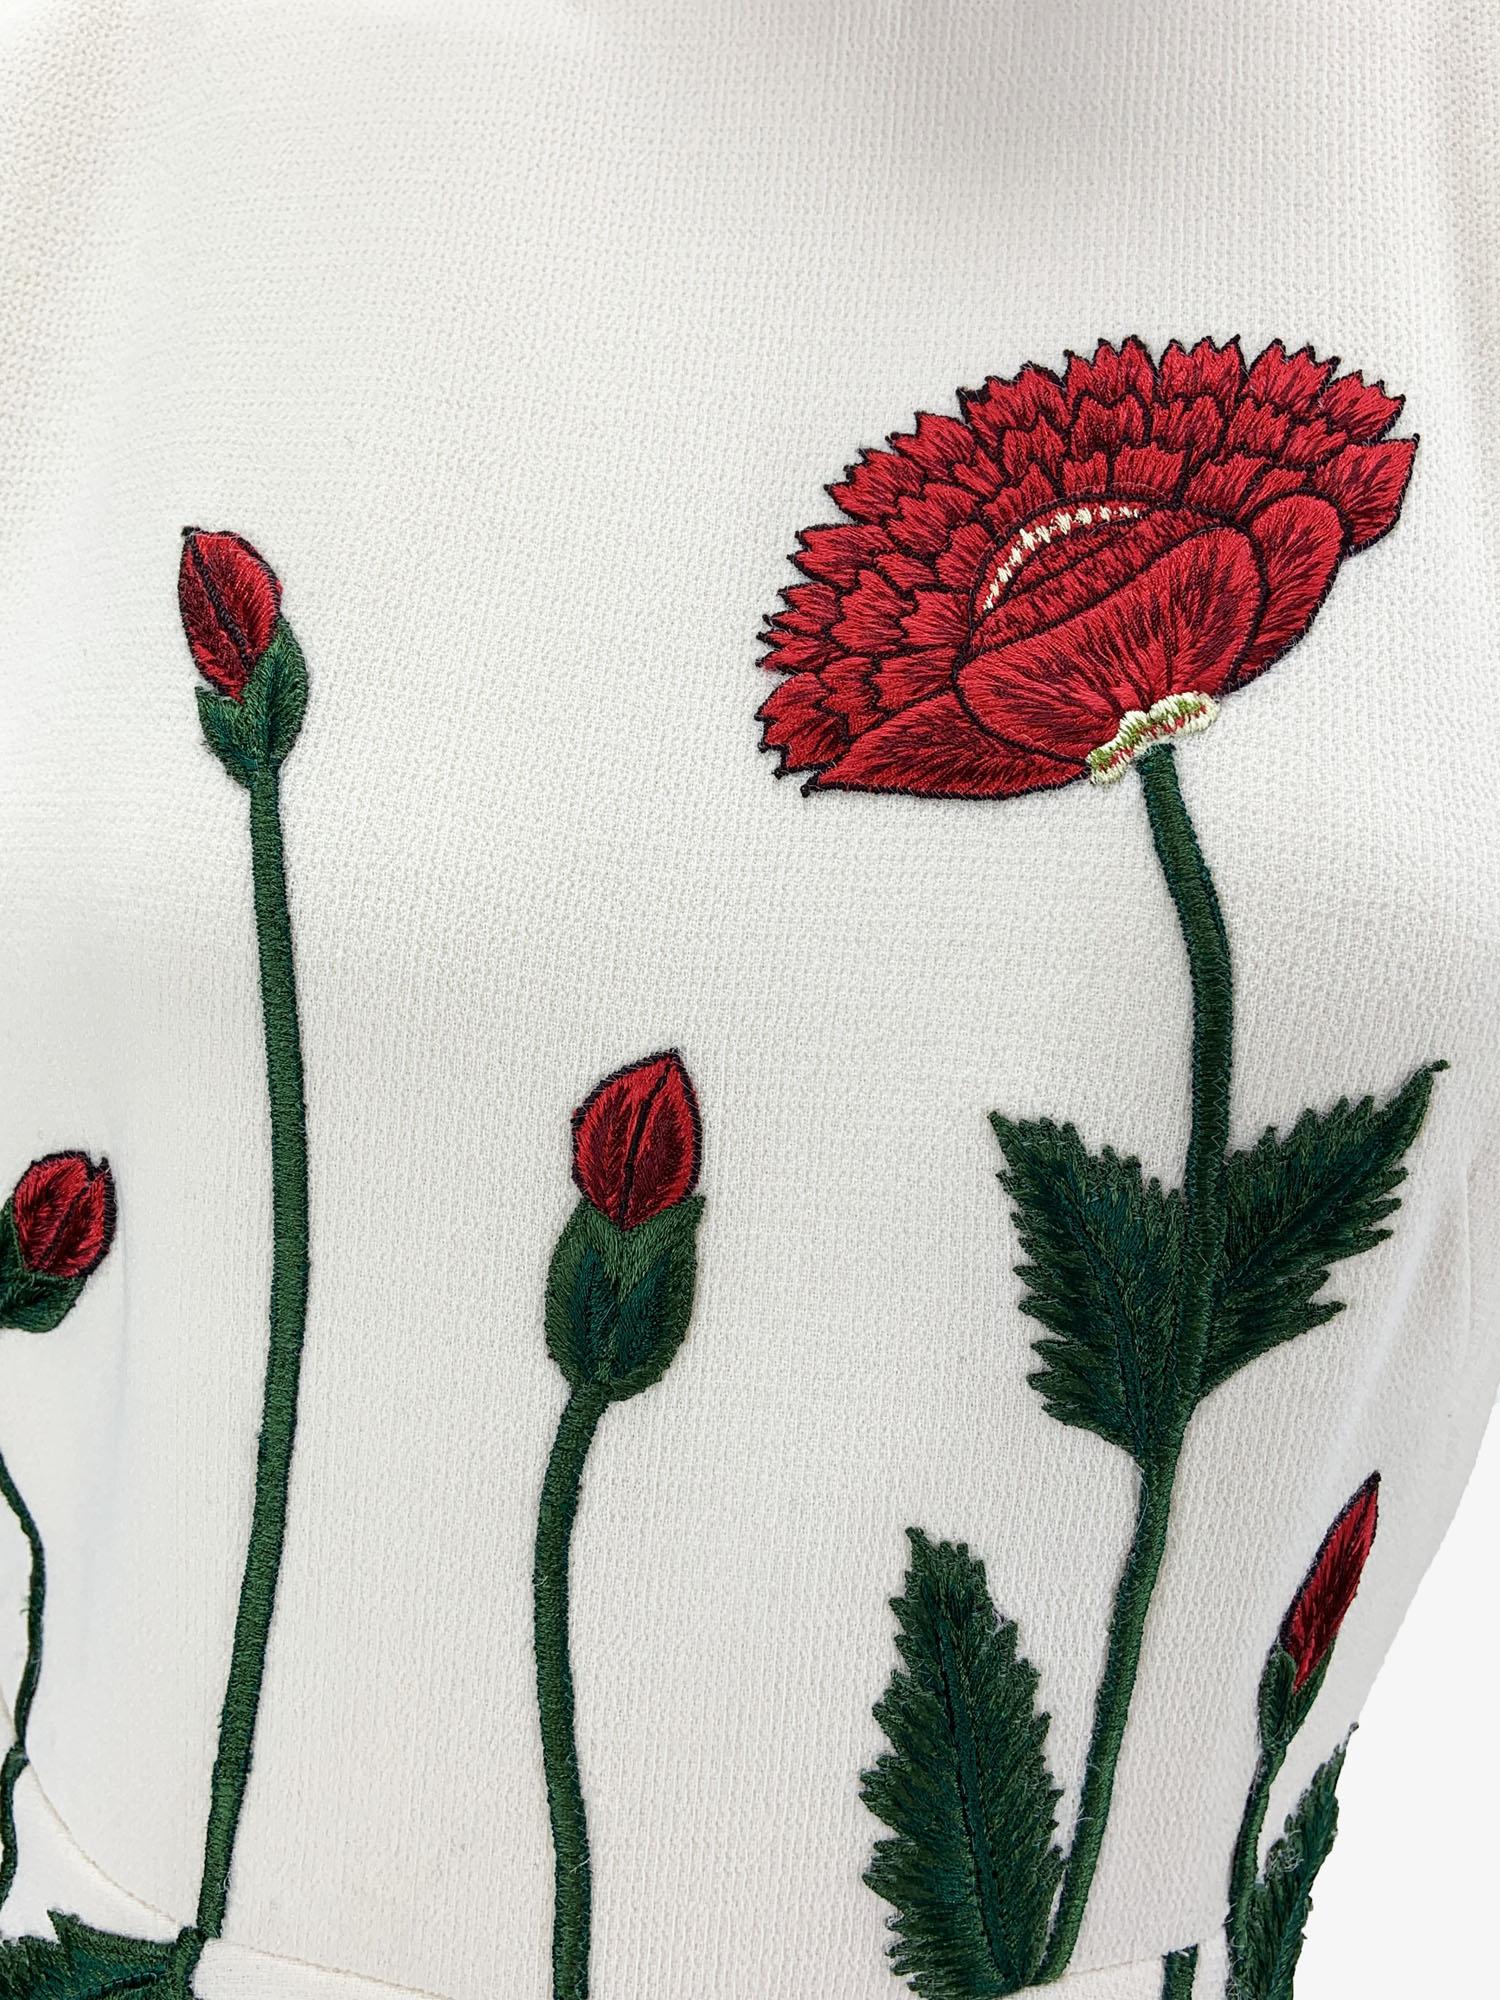 NWT Oscar de la Renta S/S 2019 Poppy Embroidered Stretch-Wool Crepe Dress US 10 For Sale 2